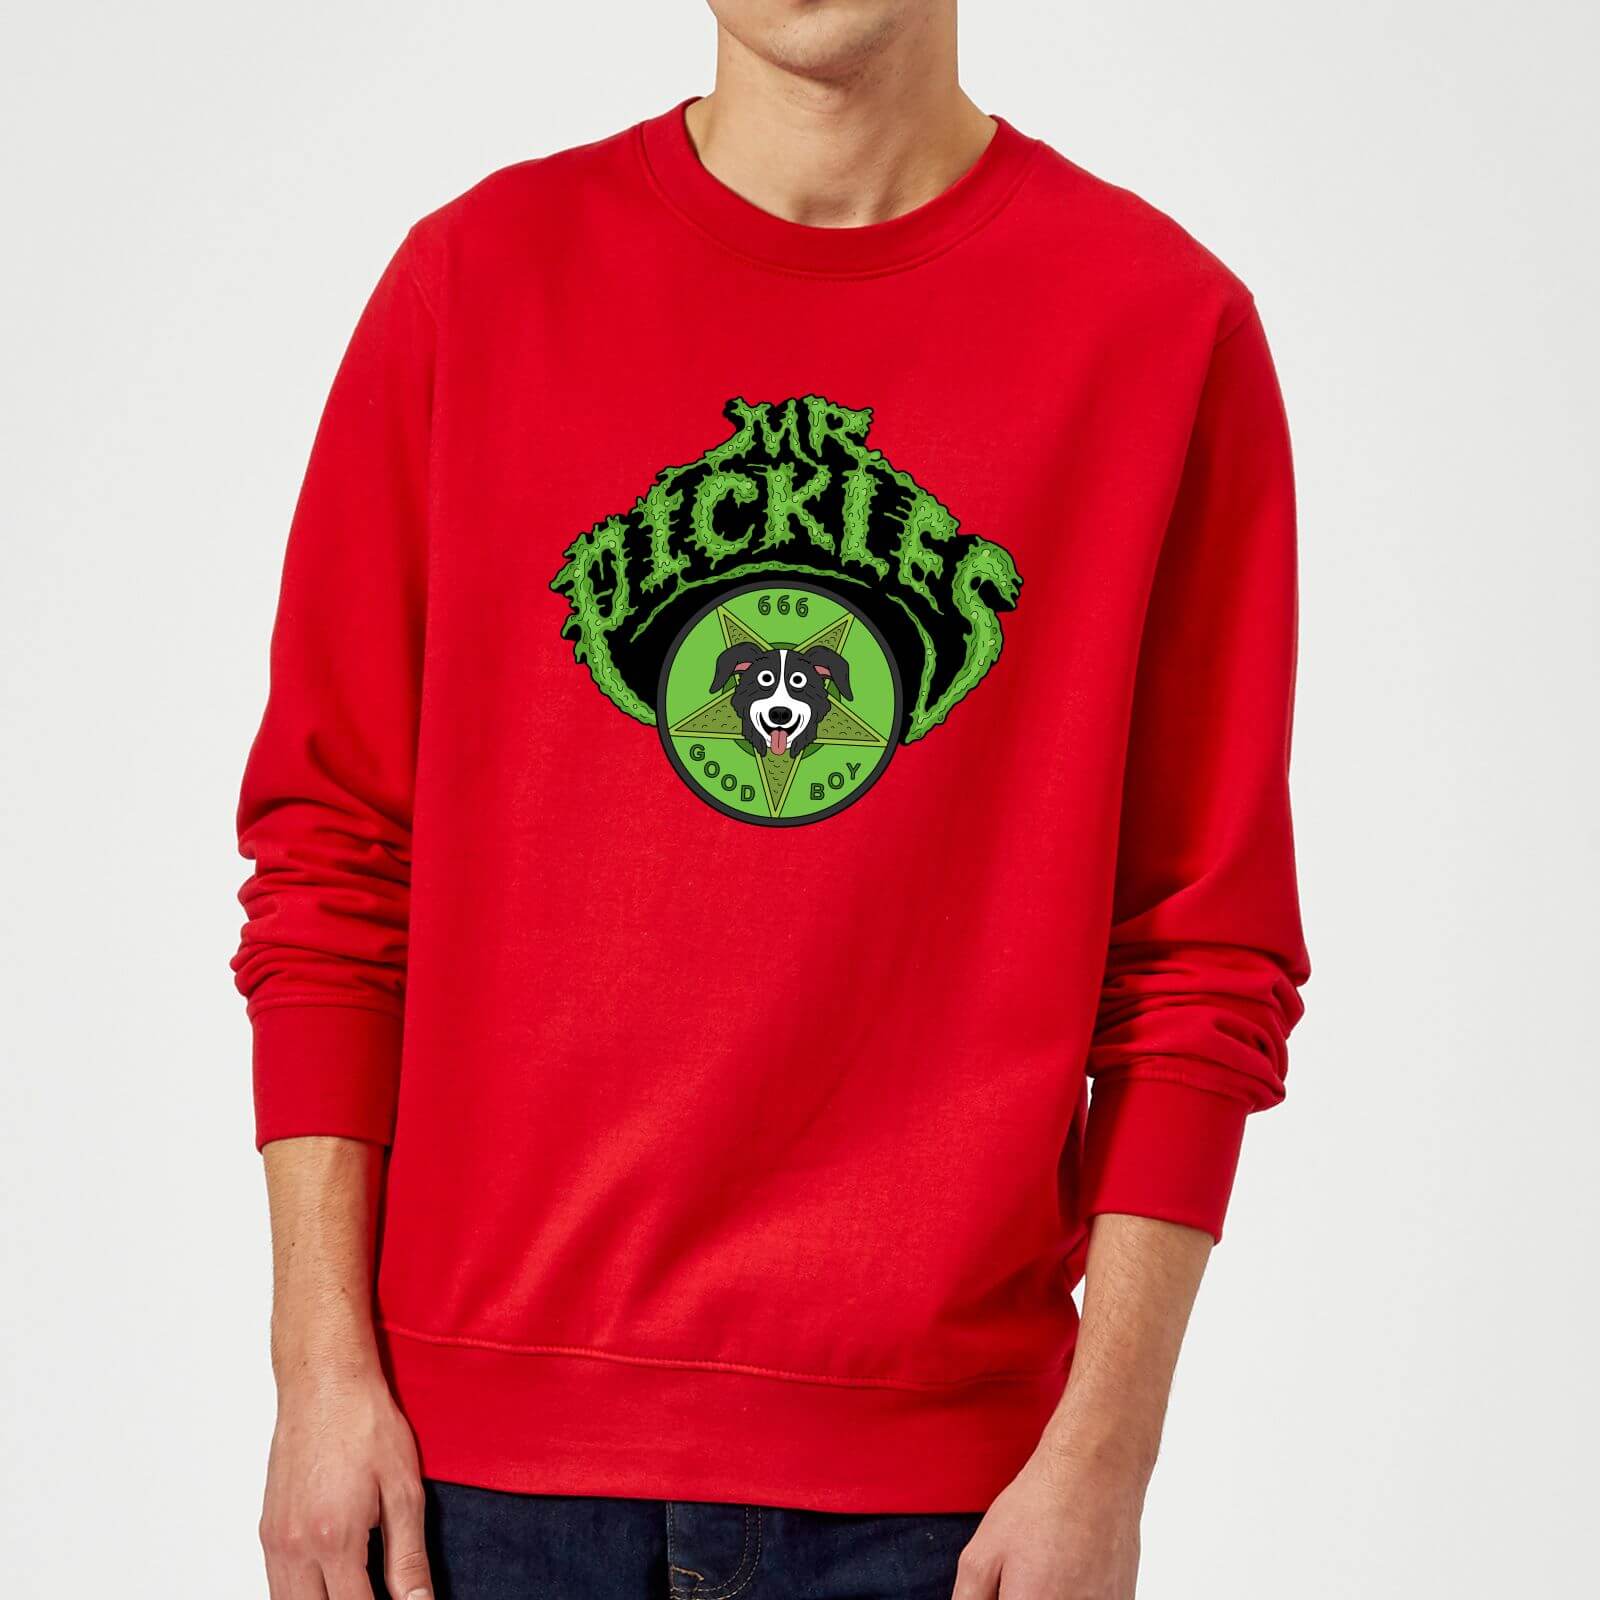 Mr Pickles Logo Sweatshirt - Red - M - Red